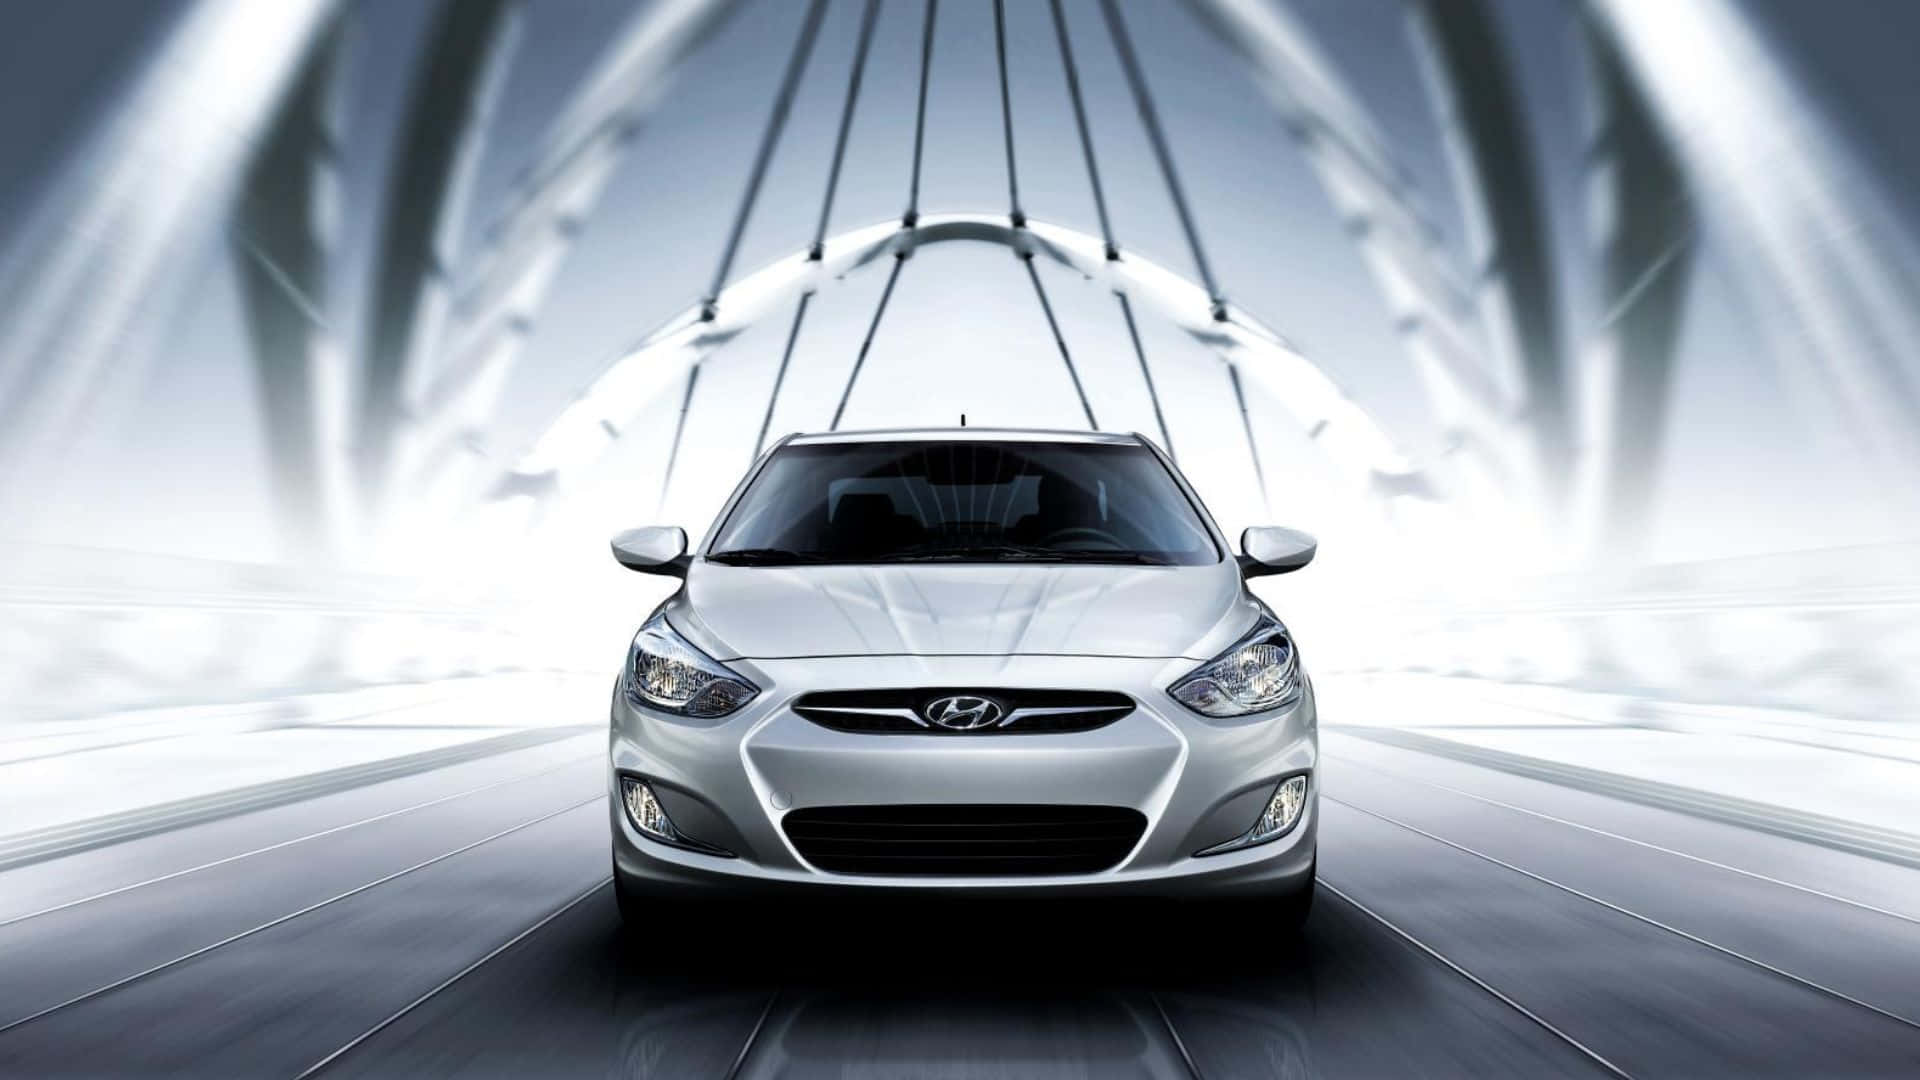 Sleek Hyundai Accent in Action Wallpaper